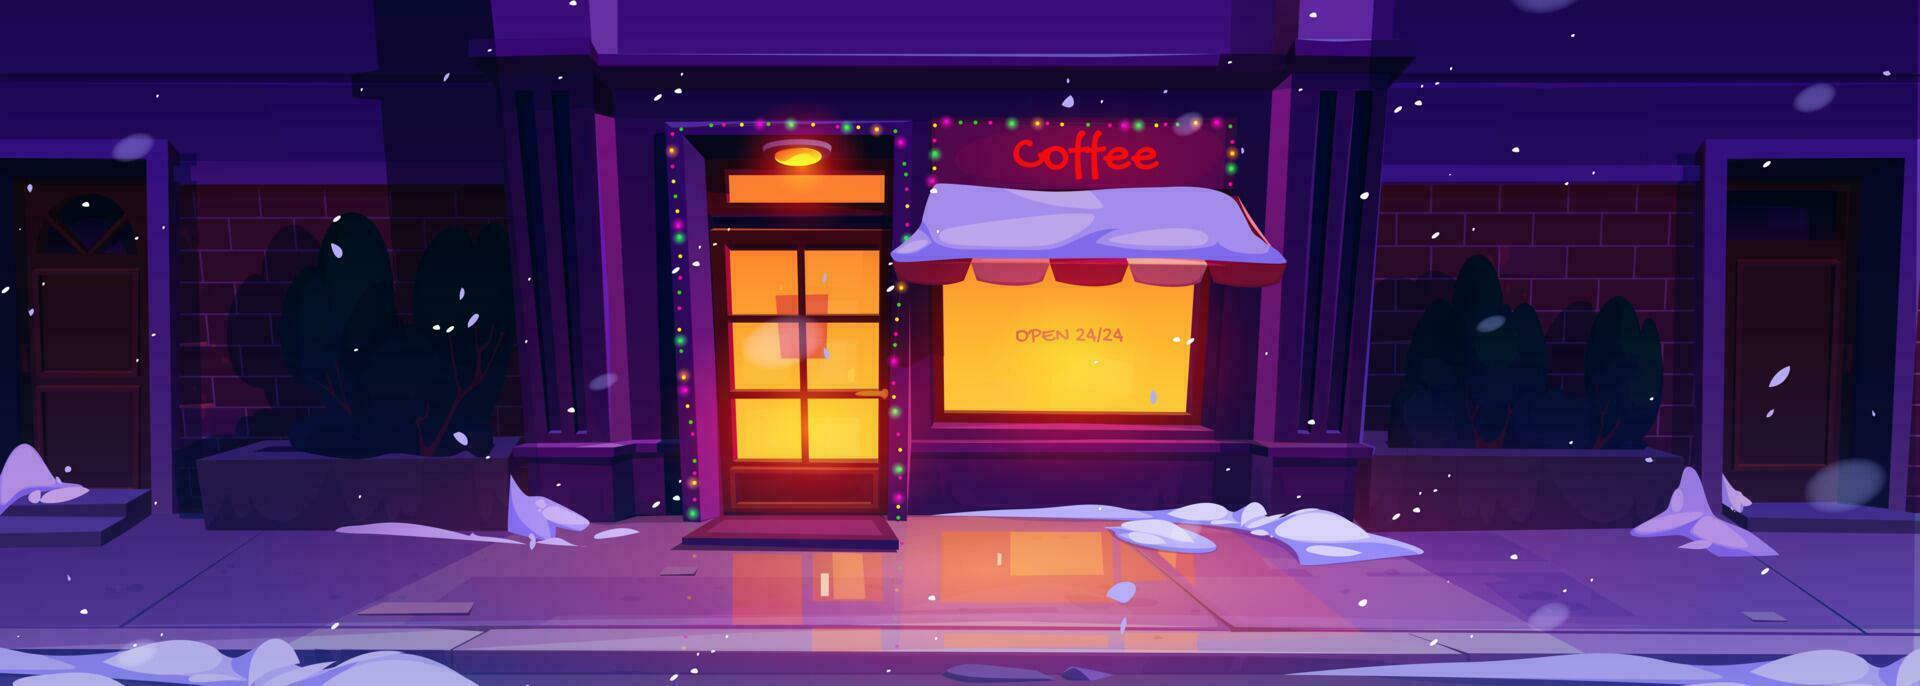 dibujos animados café exterior con Navidad decoración vector